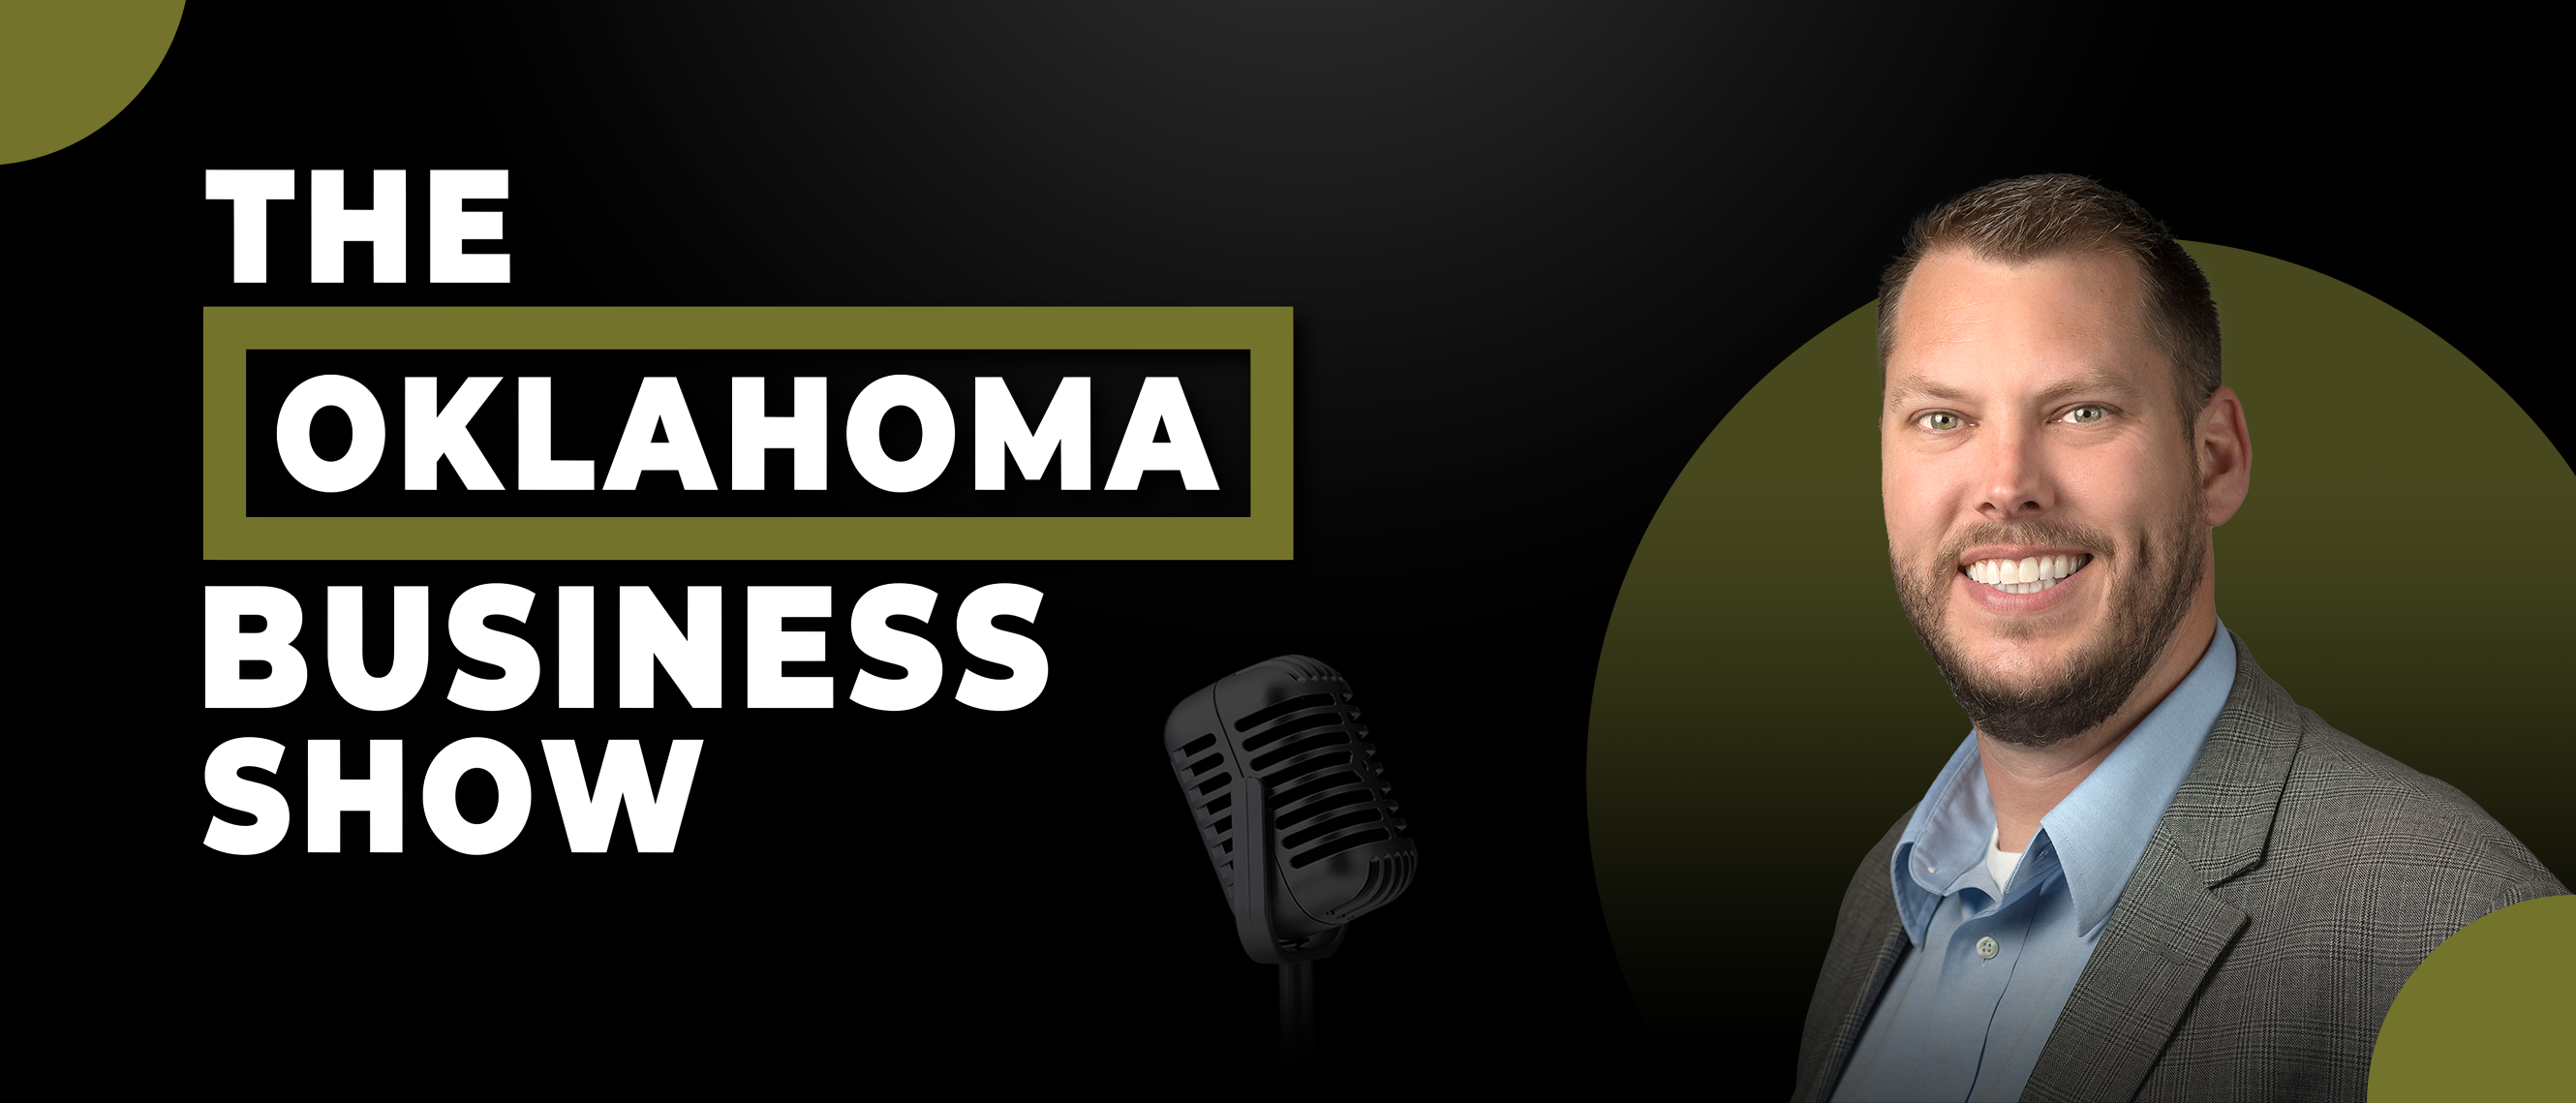 The Oklahoma Business Show